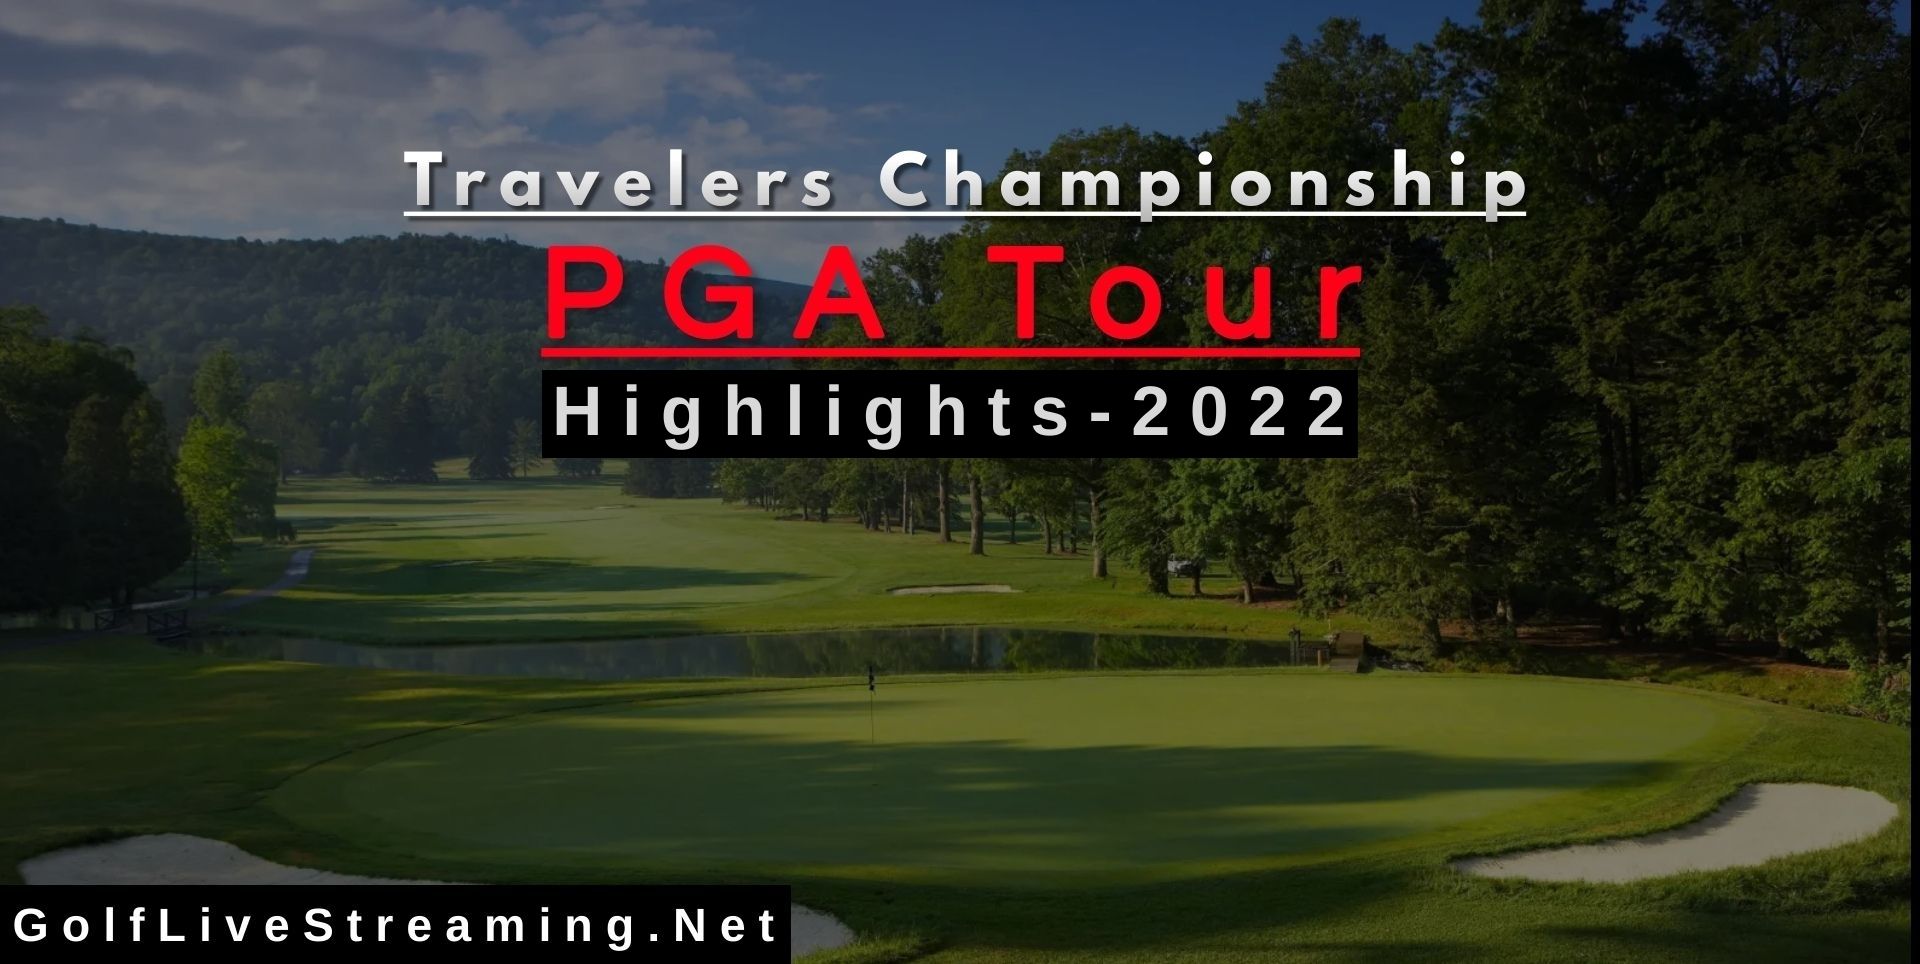 Travelers Championship Round 4 Highlights 2022 PGA Tour